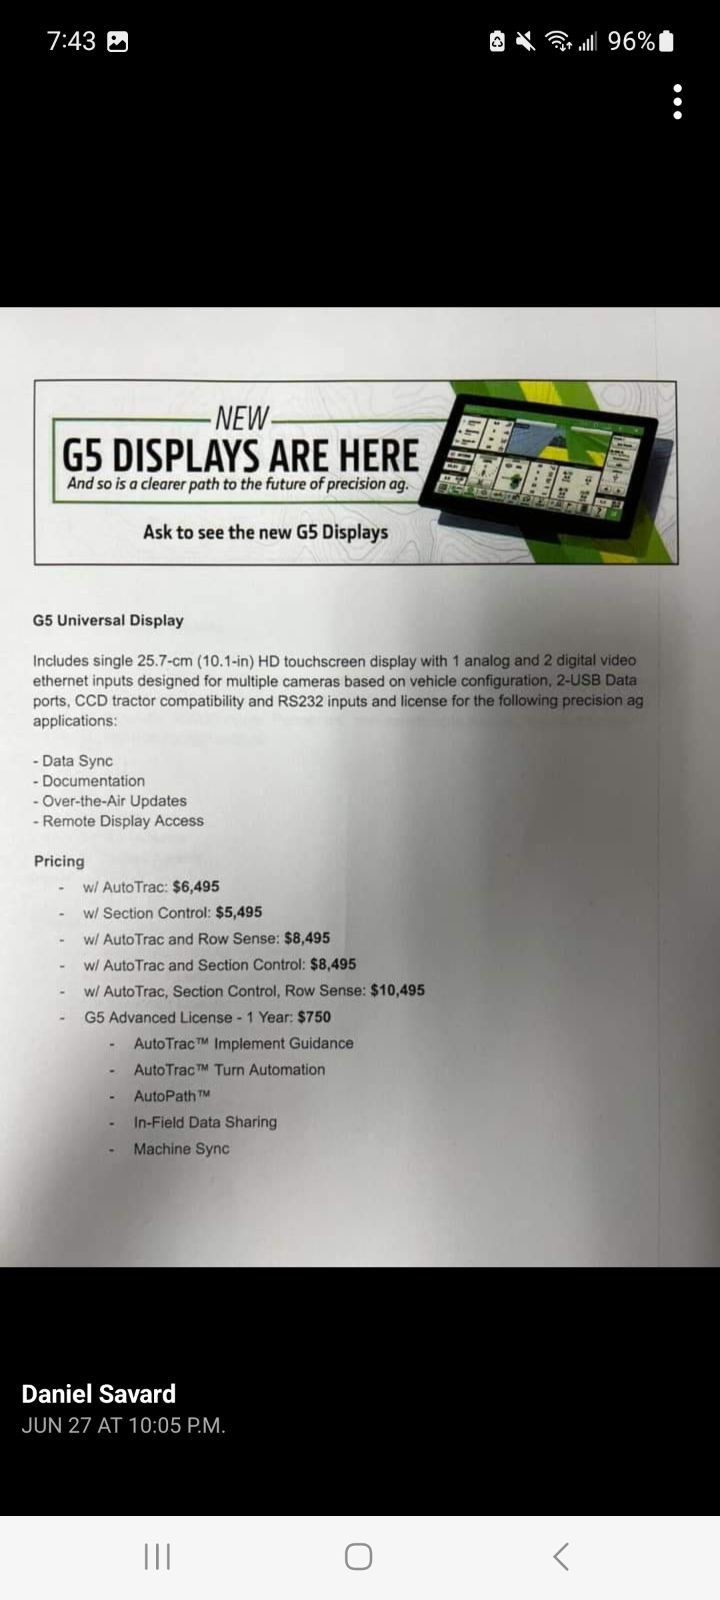 Guidance, G5 Universal Display